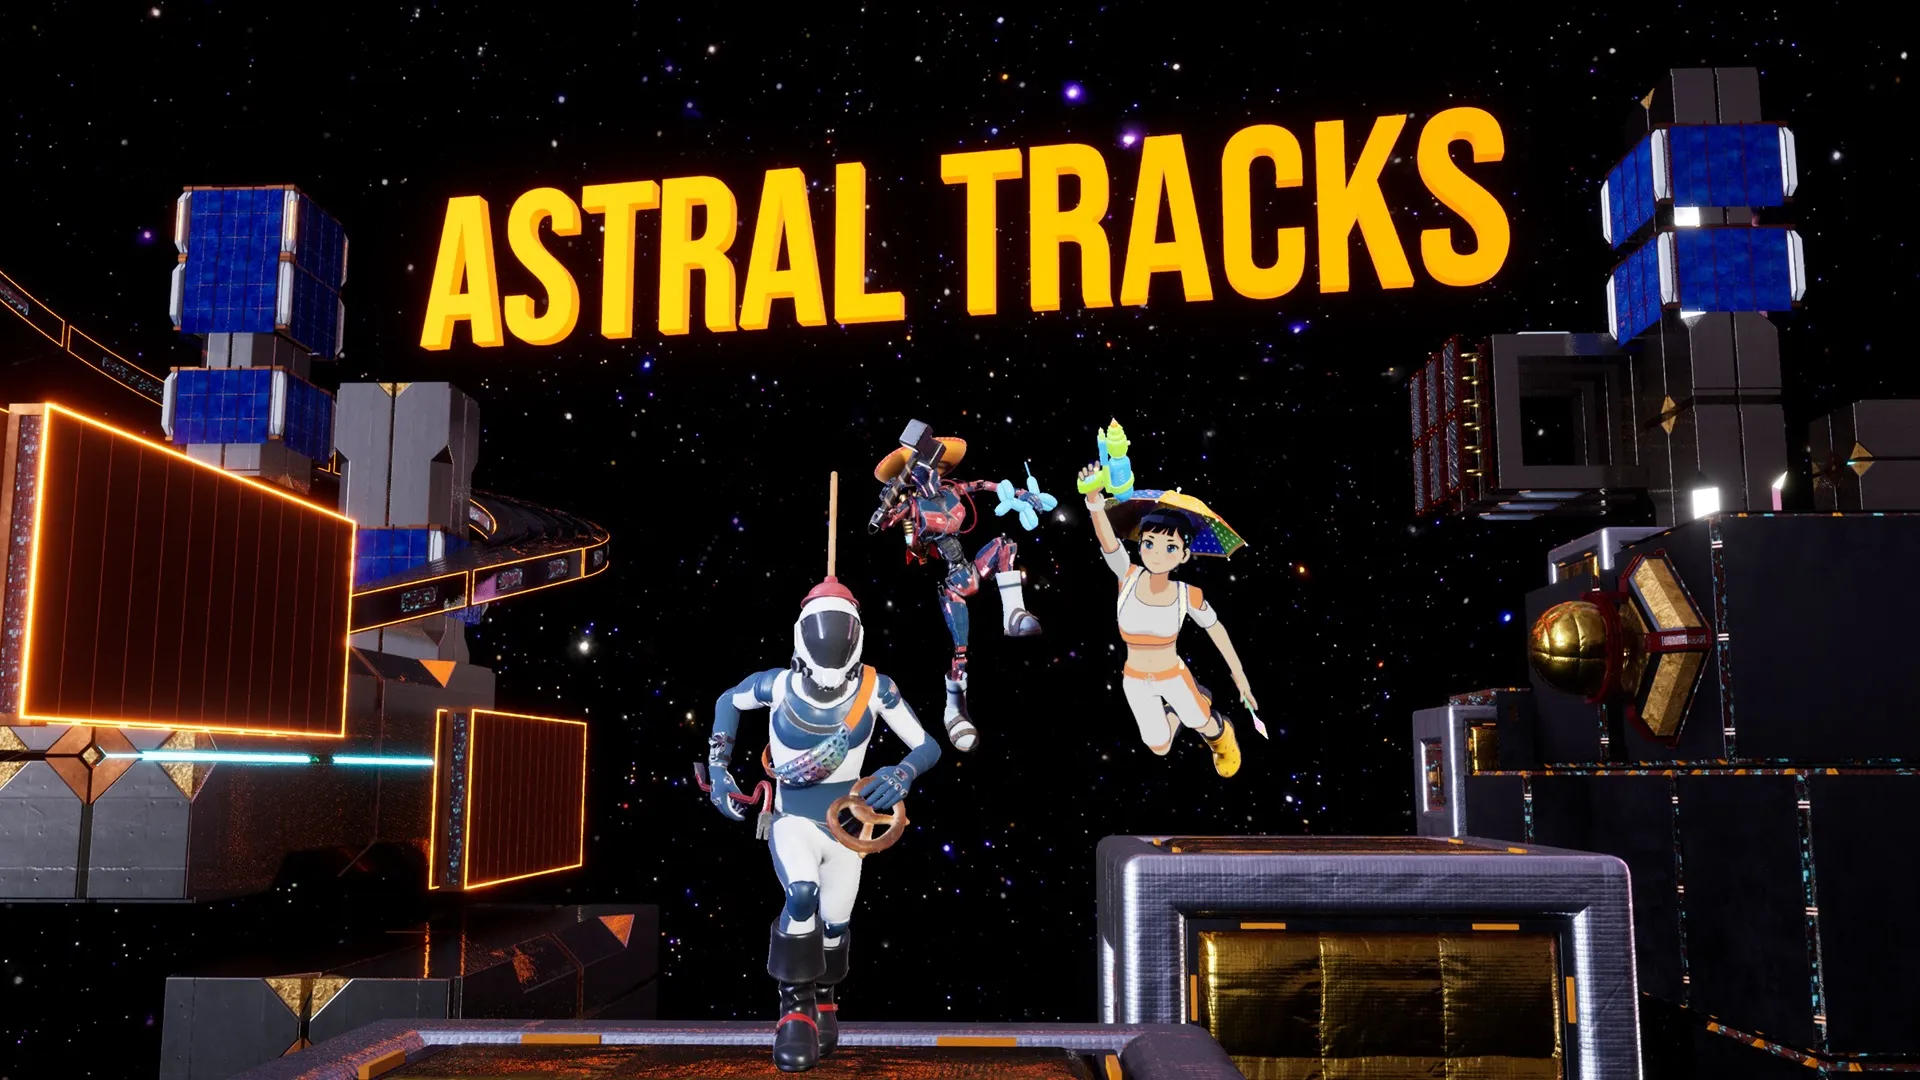 Astral Tracks rog ally game settings